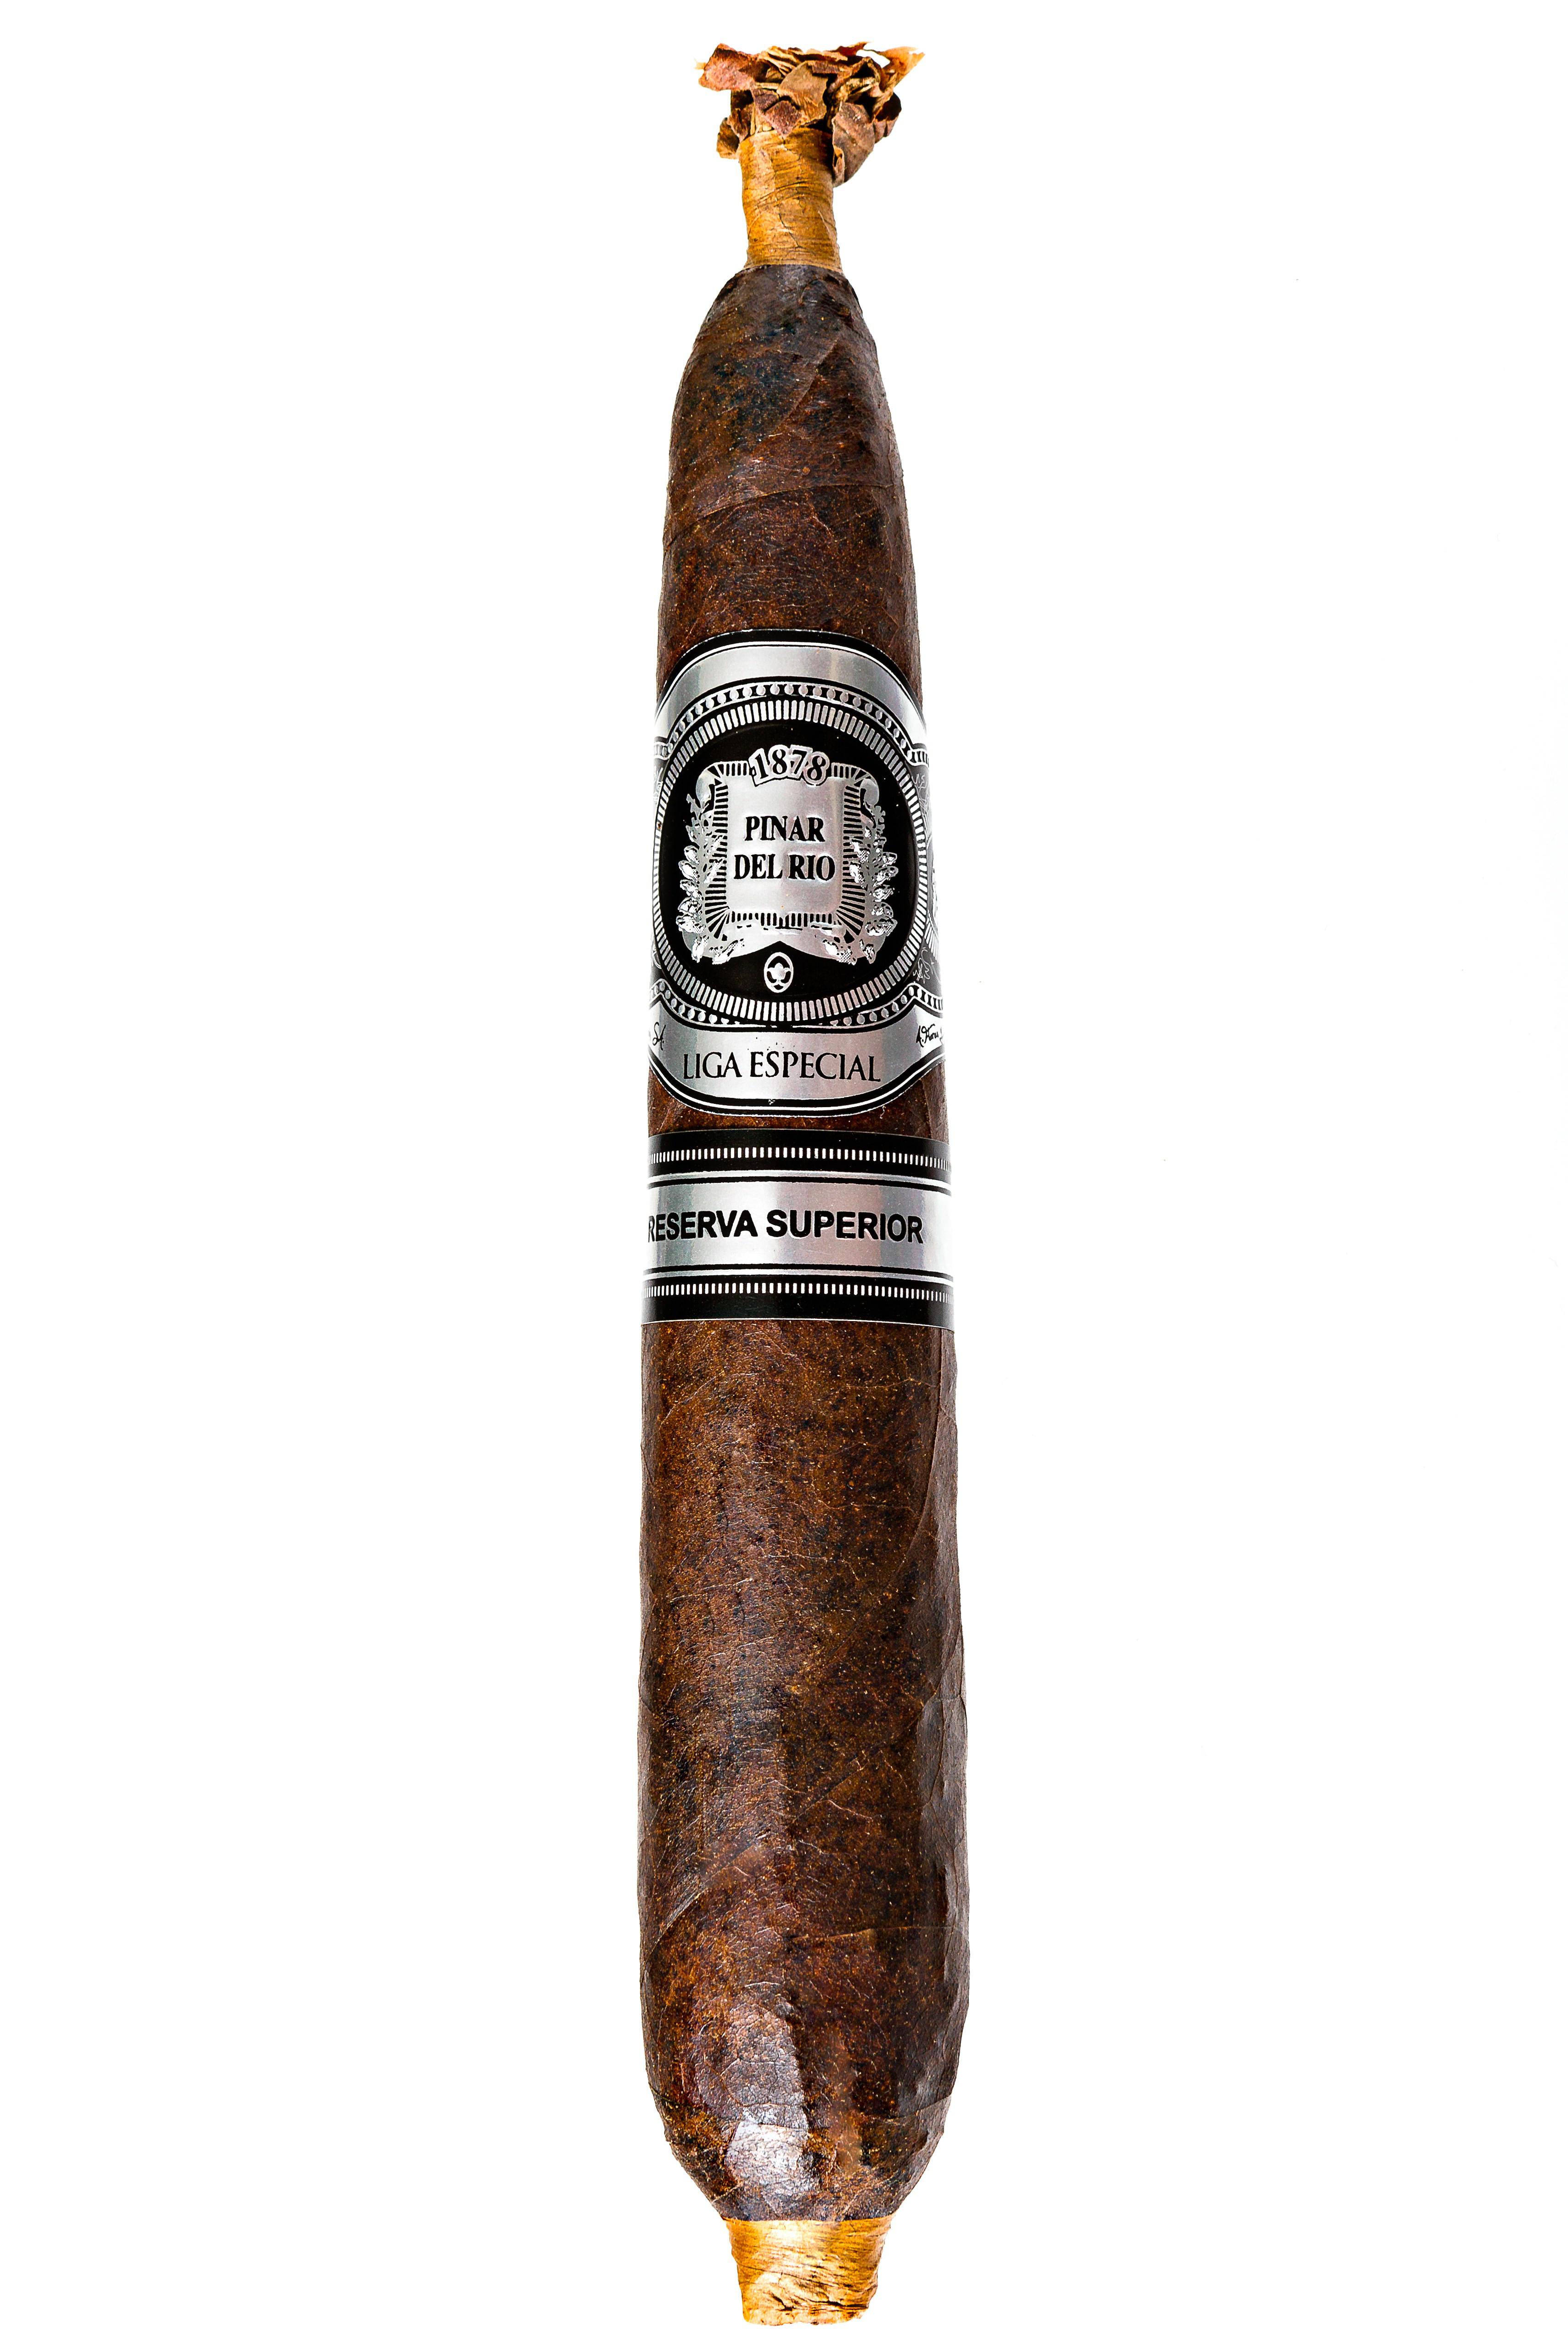 Press Release: PDR Cigars Announces Release of the Reserva Superior Salomon